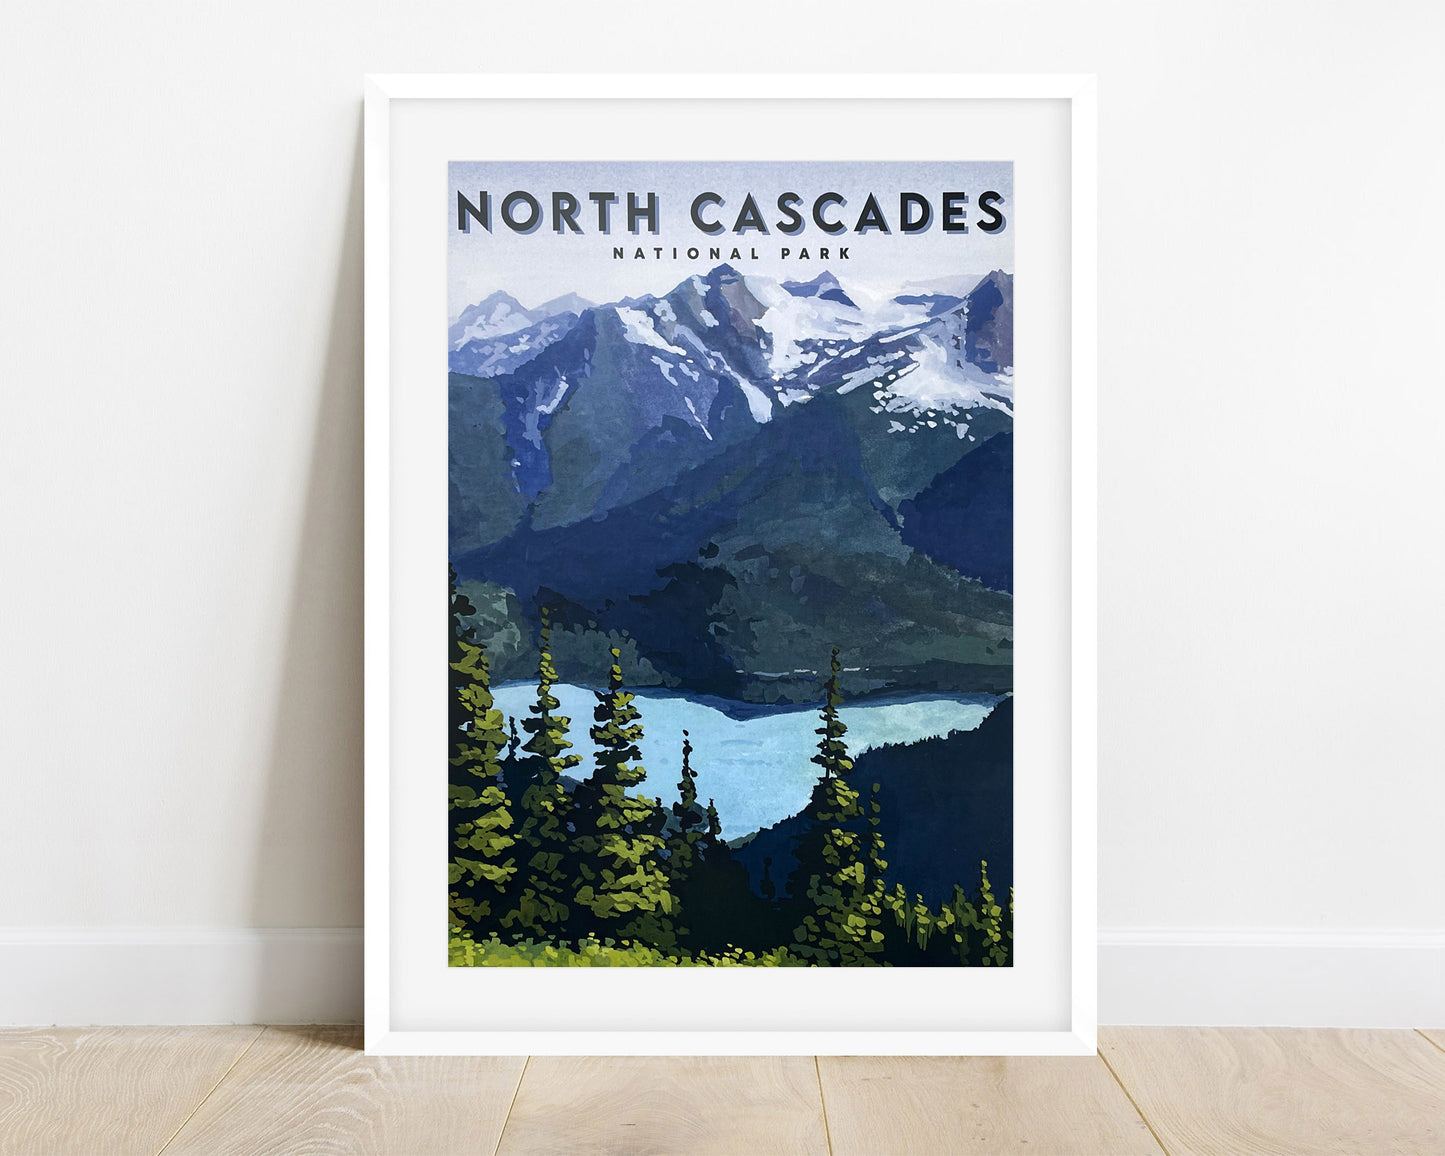 'North Cascades' National Park Travel Poster